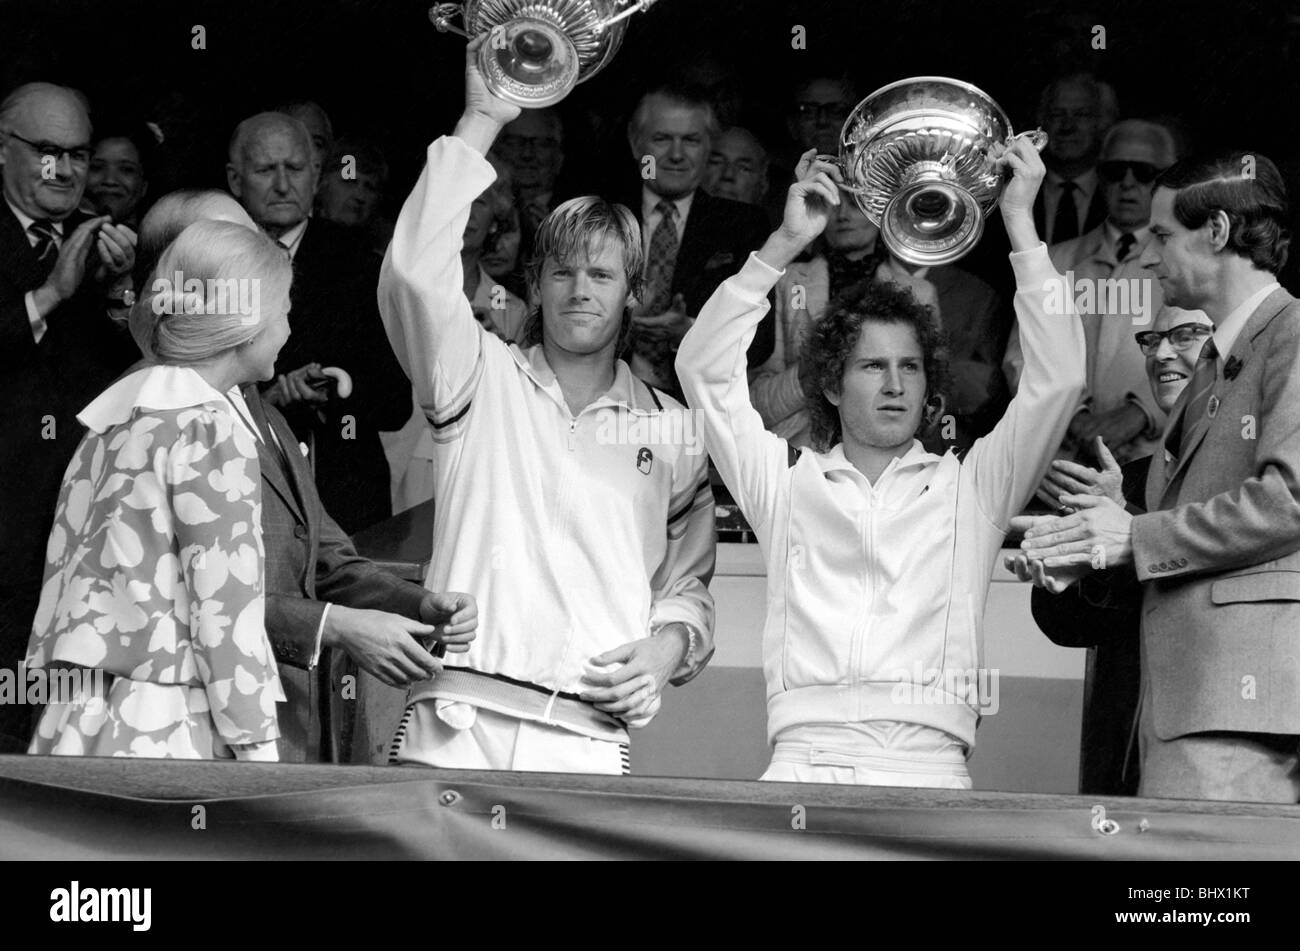 Tournoi de tennis de Wimbledon. 1981 Womens finales. Chris Evert Lloyd c. Hana Mandlikova. L'observation de la princesse Diana. Juillet 1981 81-3782-034 Banque D'Images